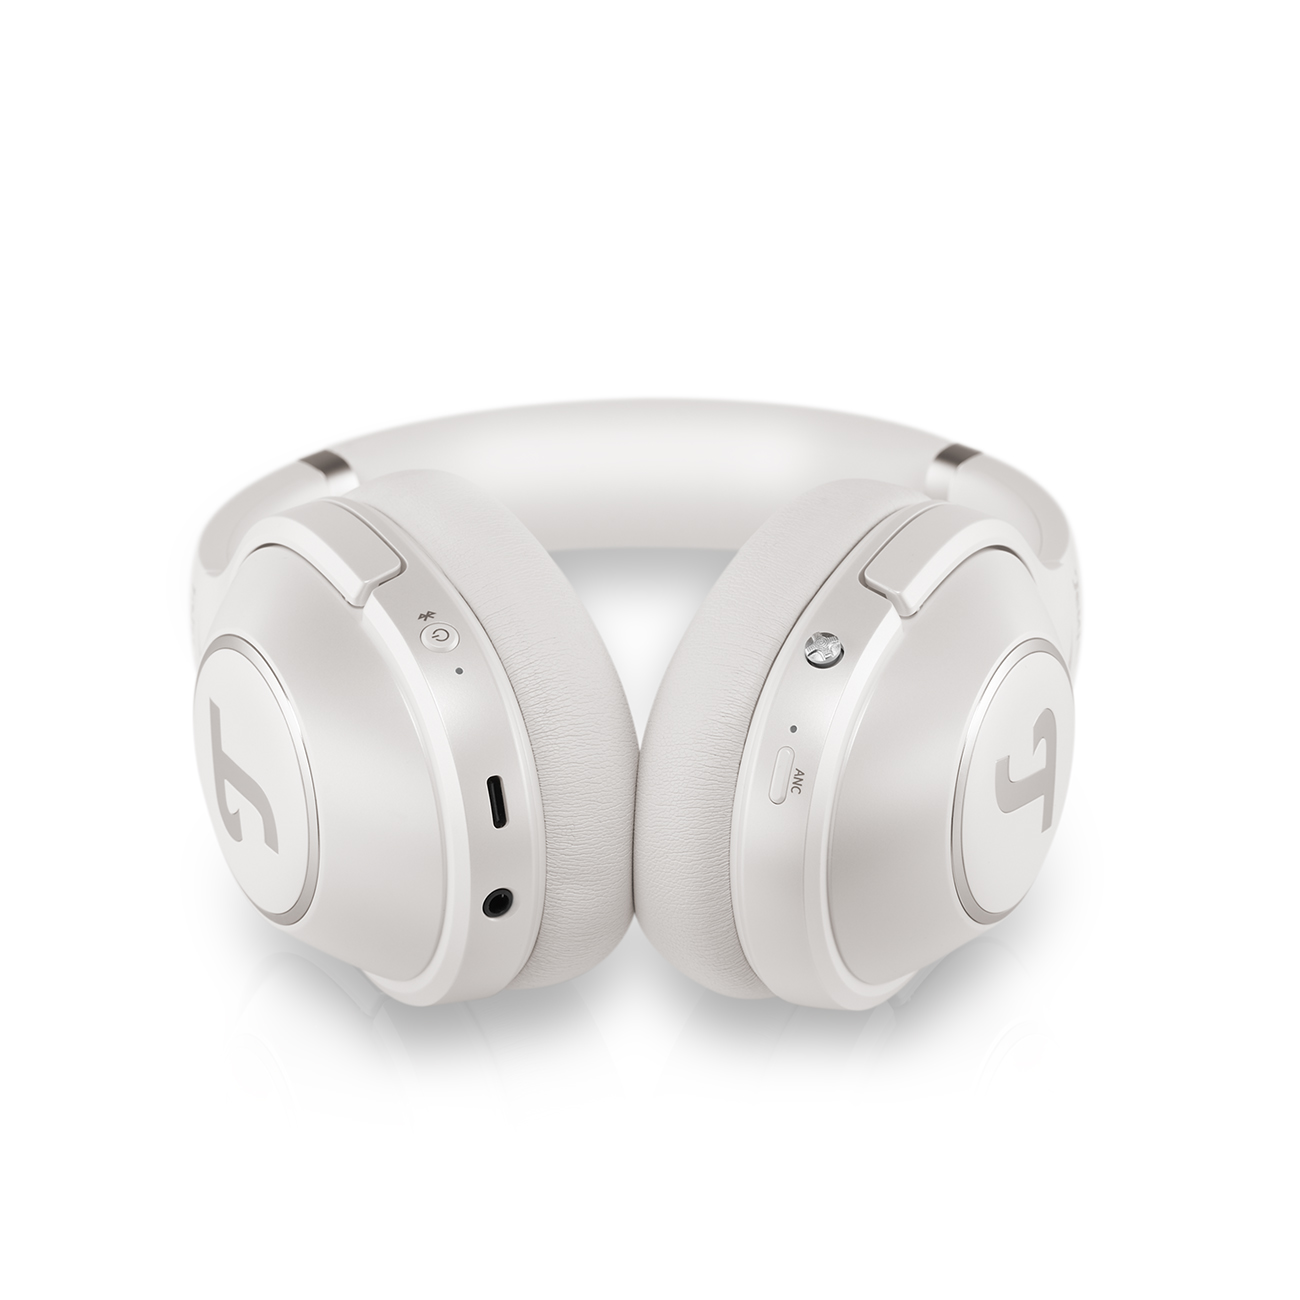 REAL NC, TEUFEL Bluetooth Kopfhörer BLUE White Pearl Over-ear